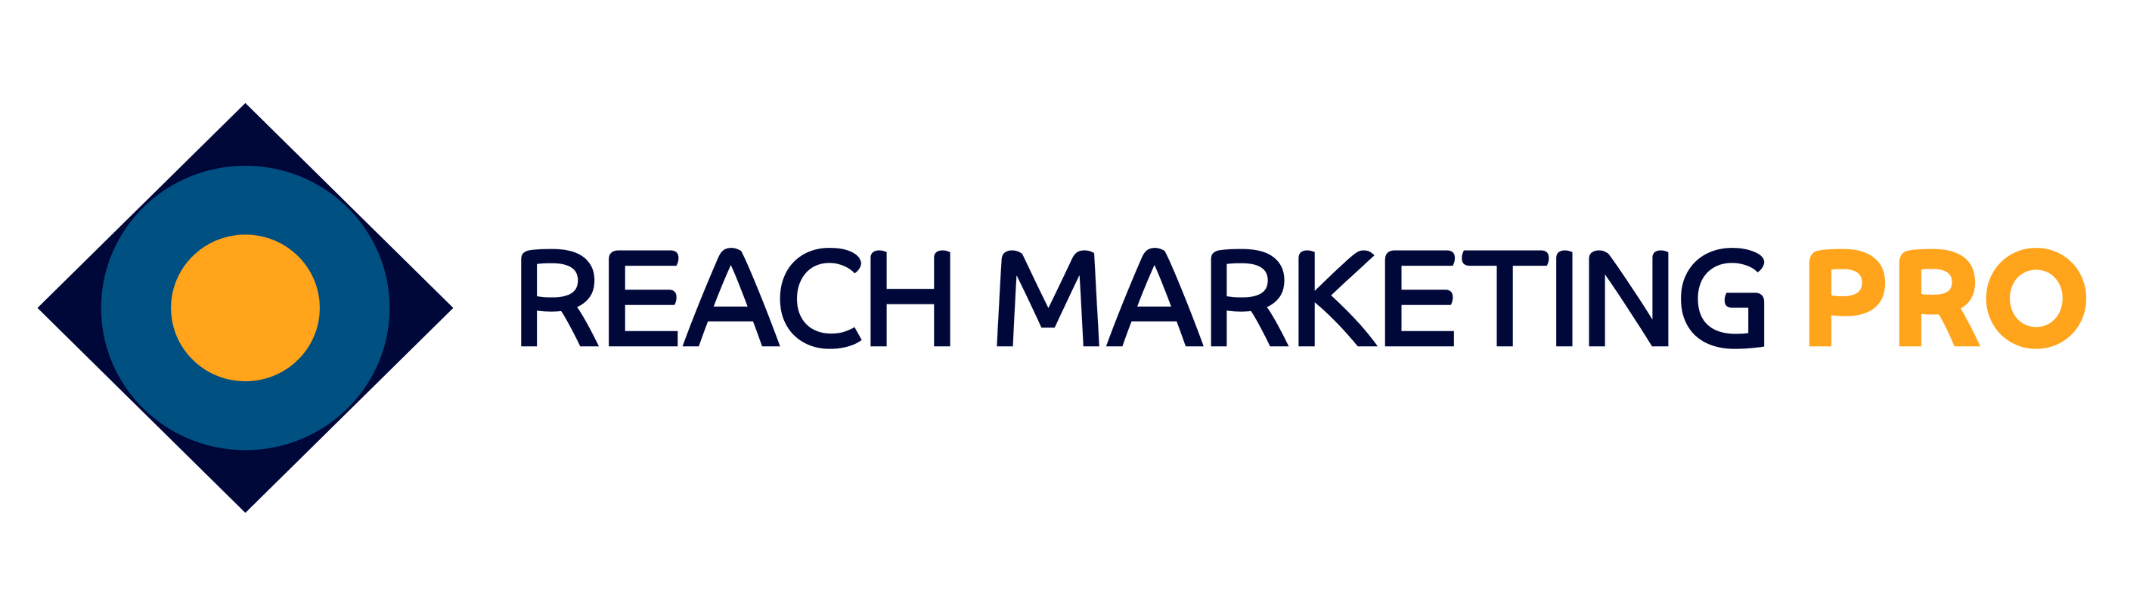 Reach Marketing Pro Logo - Sophie Says